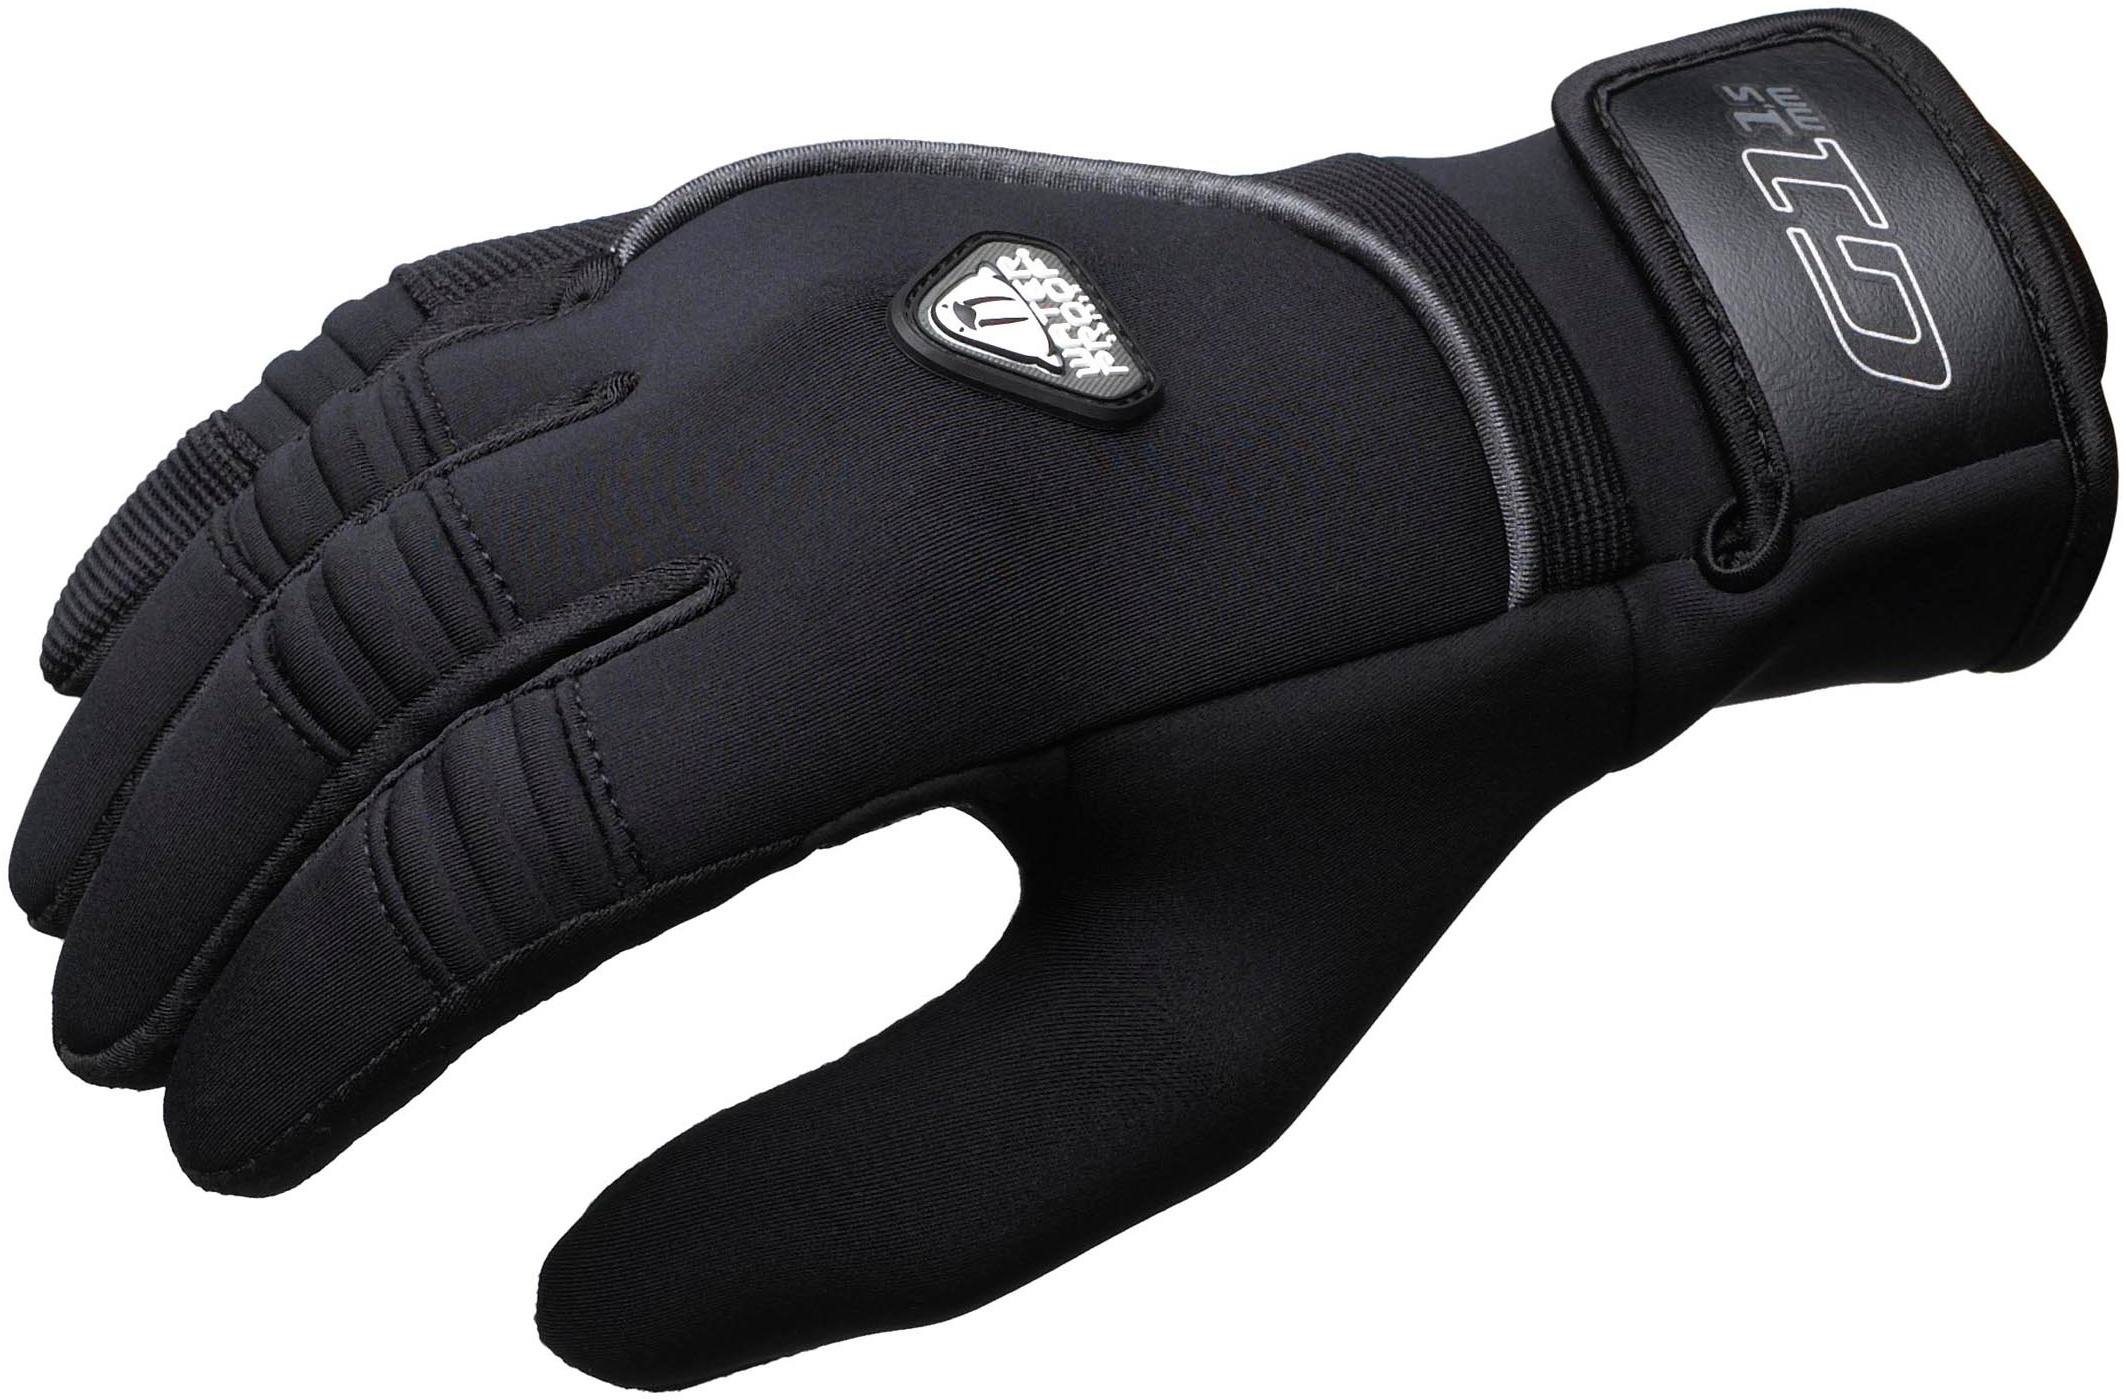 Waterproof 1.5mm G1 5 Finger Glove